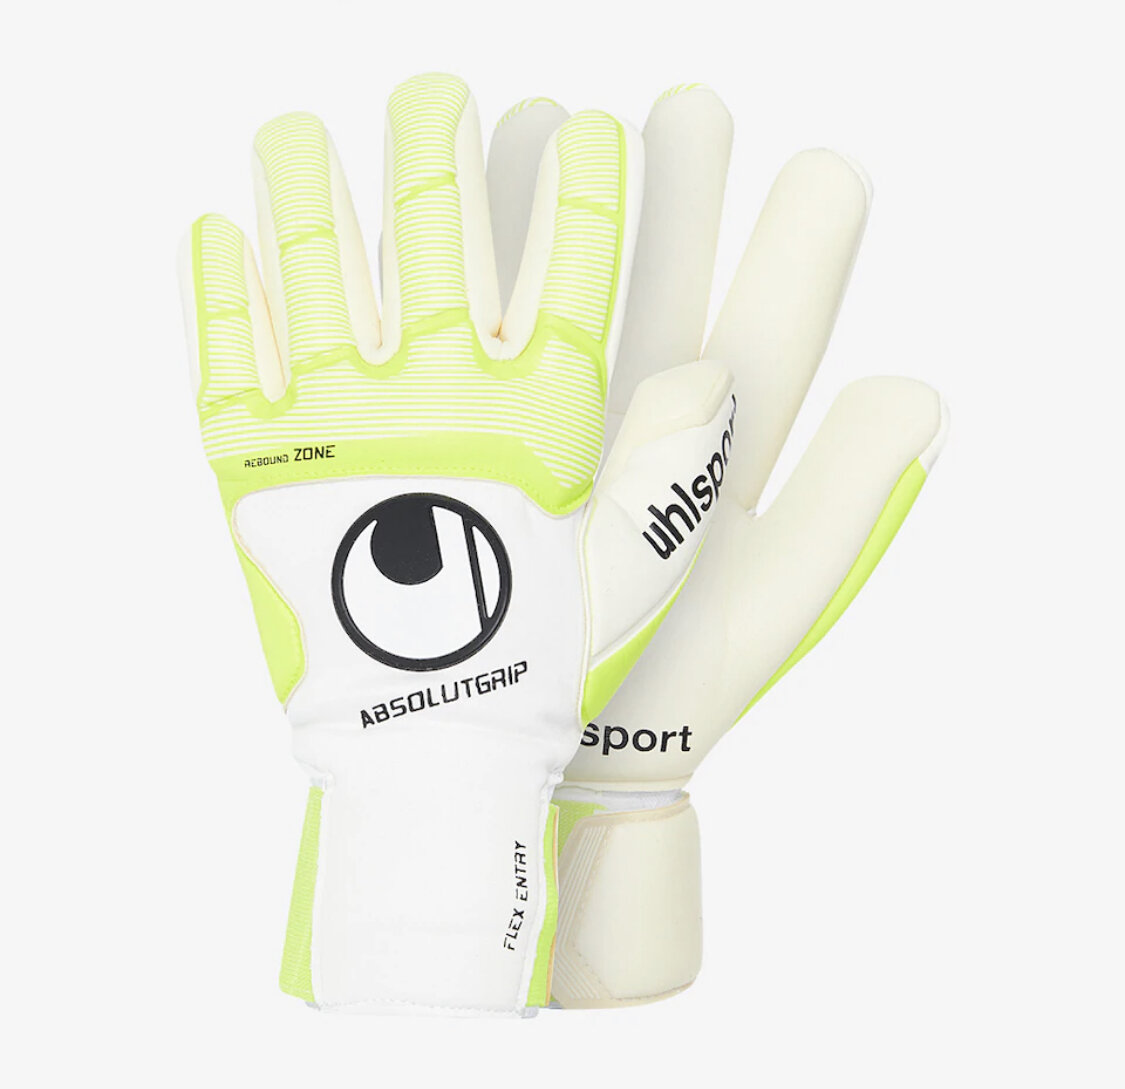 Uhlsport Pure Alliance Absolutgrip Finger Surround Goalkeeper Gloves Brand New 